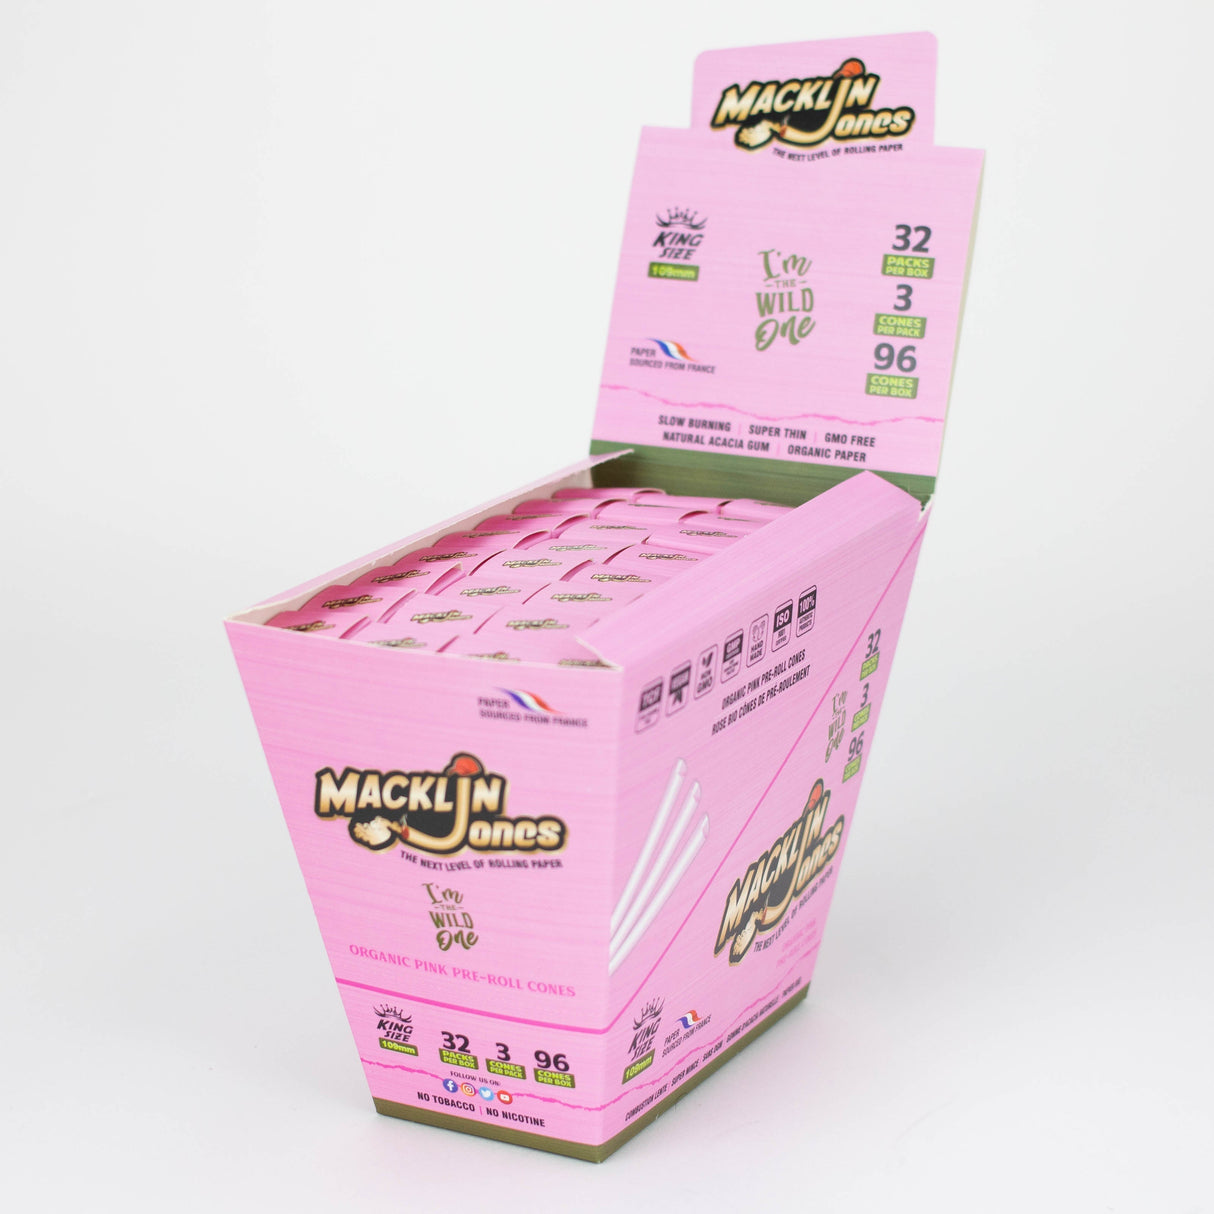 Macklin Jones - Rose Pink Pre-Rolled cone Box